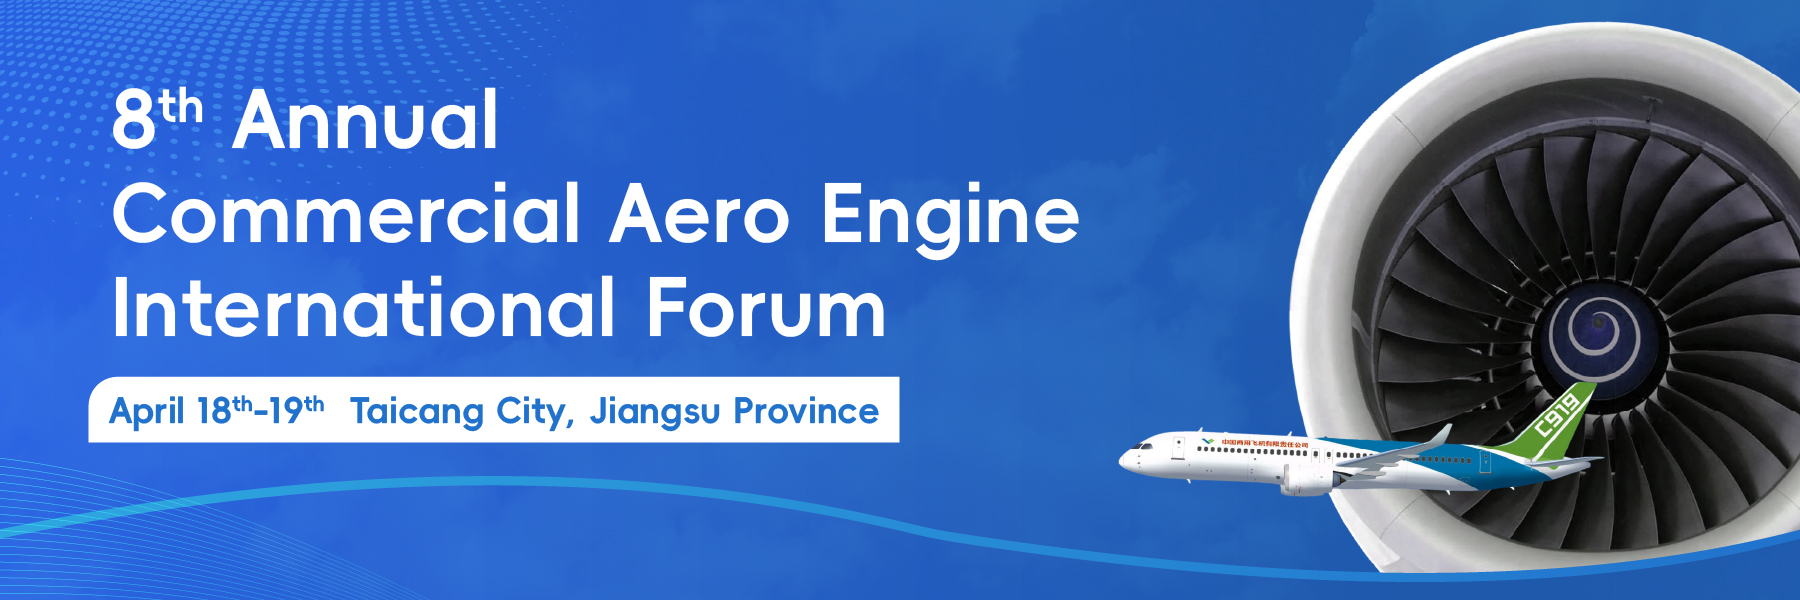 8th Annual Commercial Aero Engine International Forum